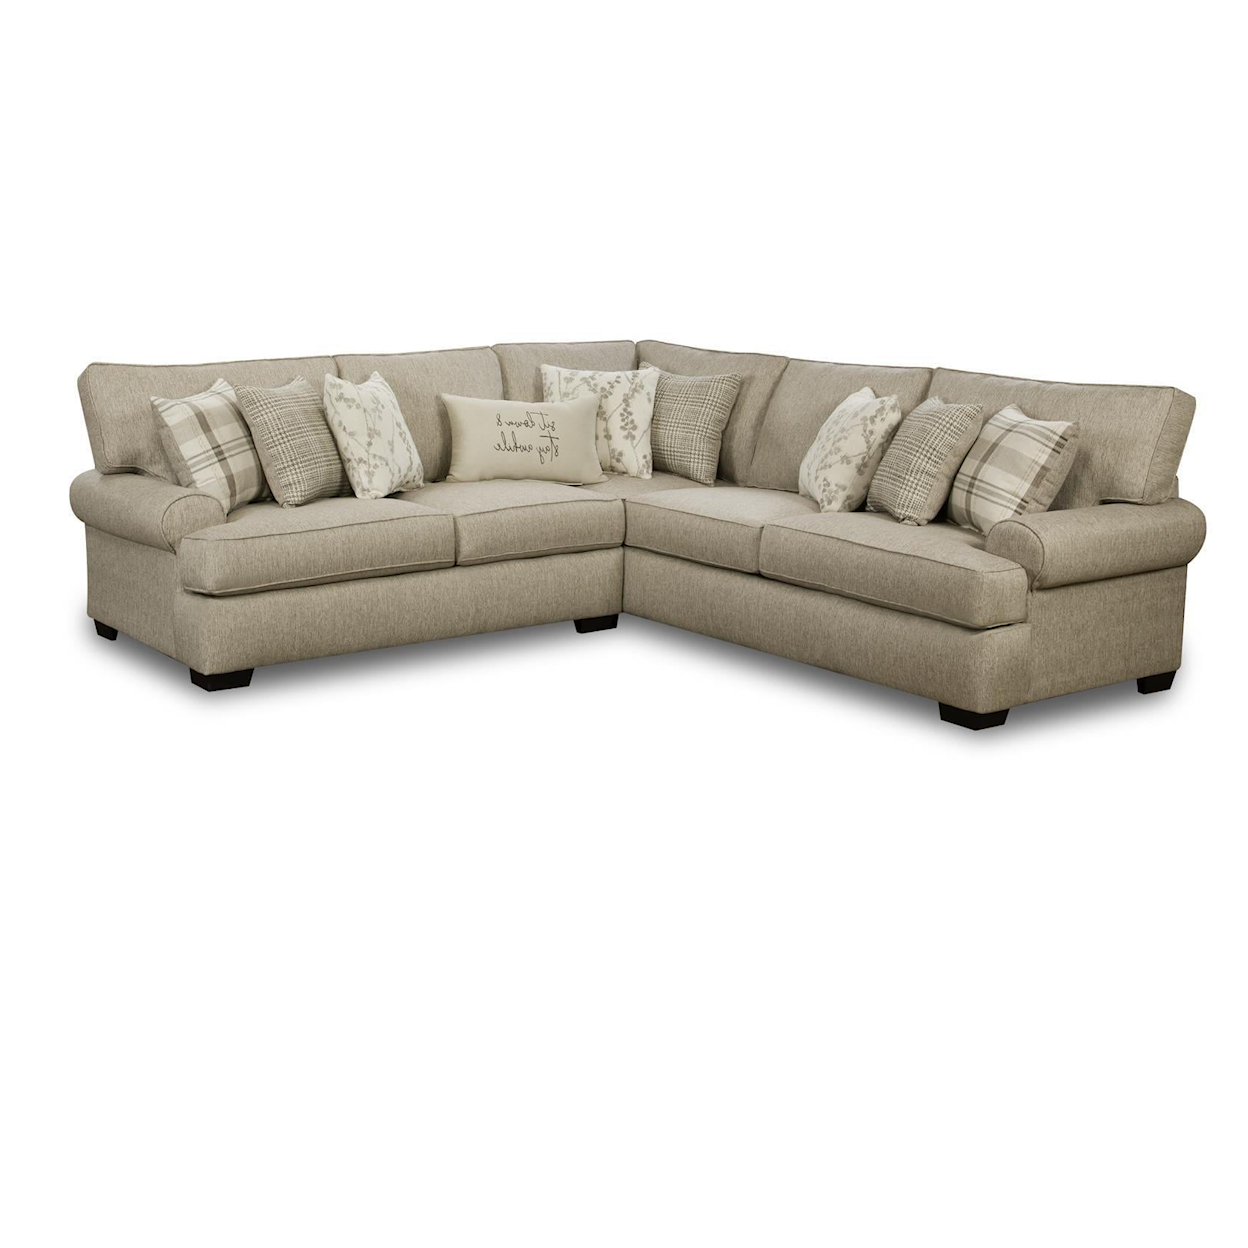 Centurion 5940 2-Piece Sectional Sofa